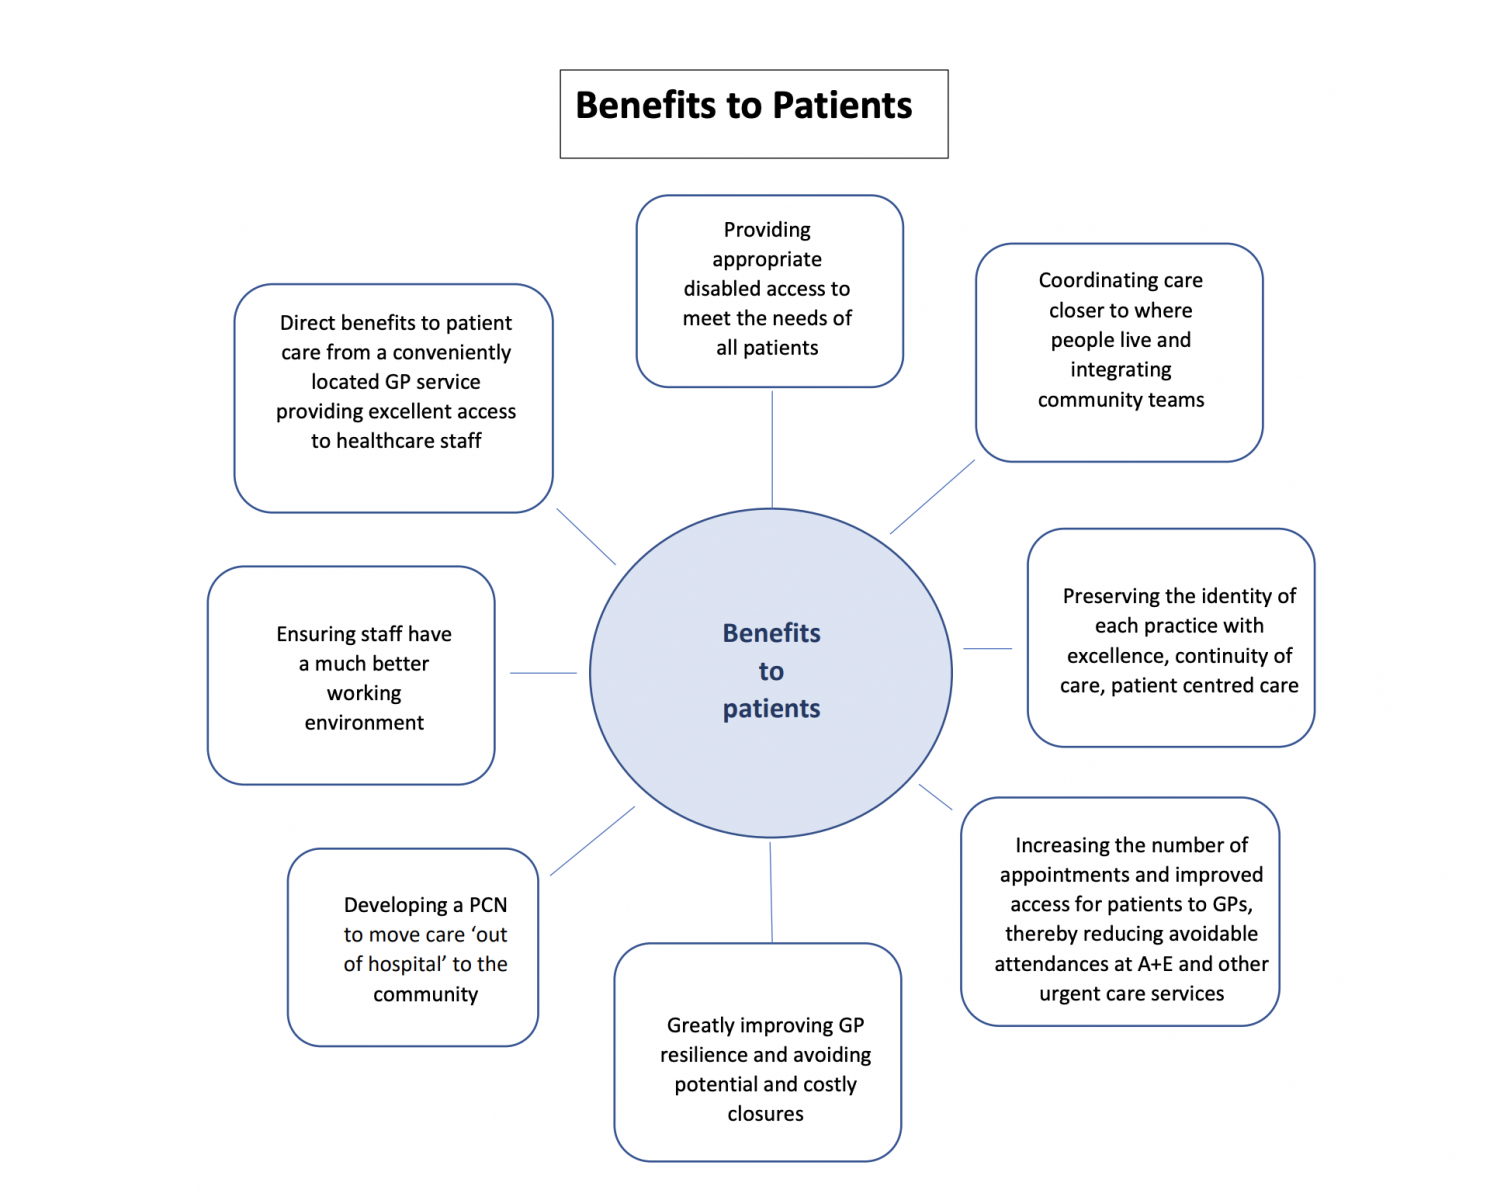 Benefits for patients